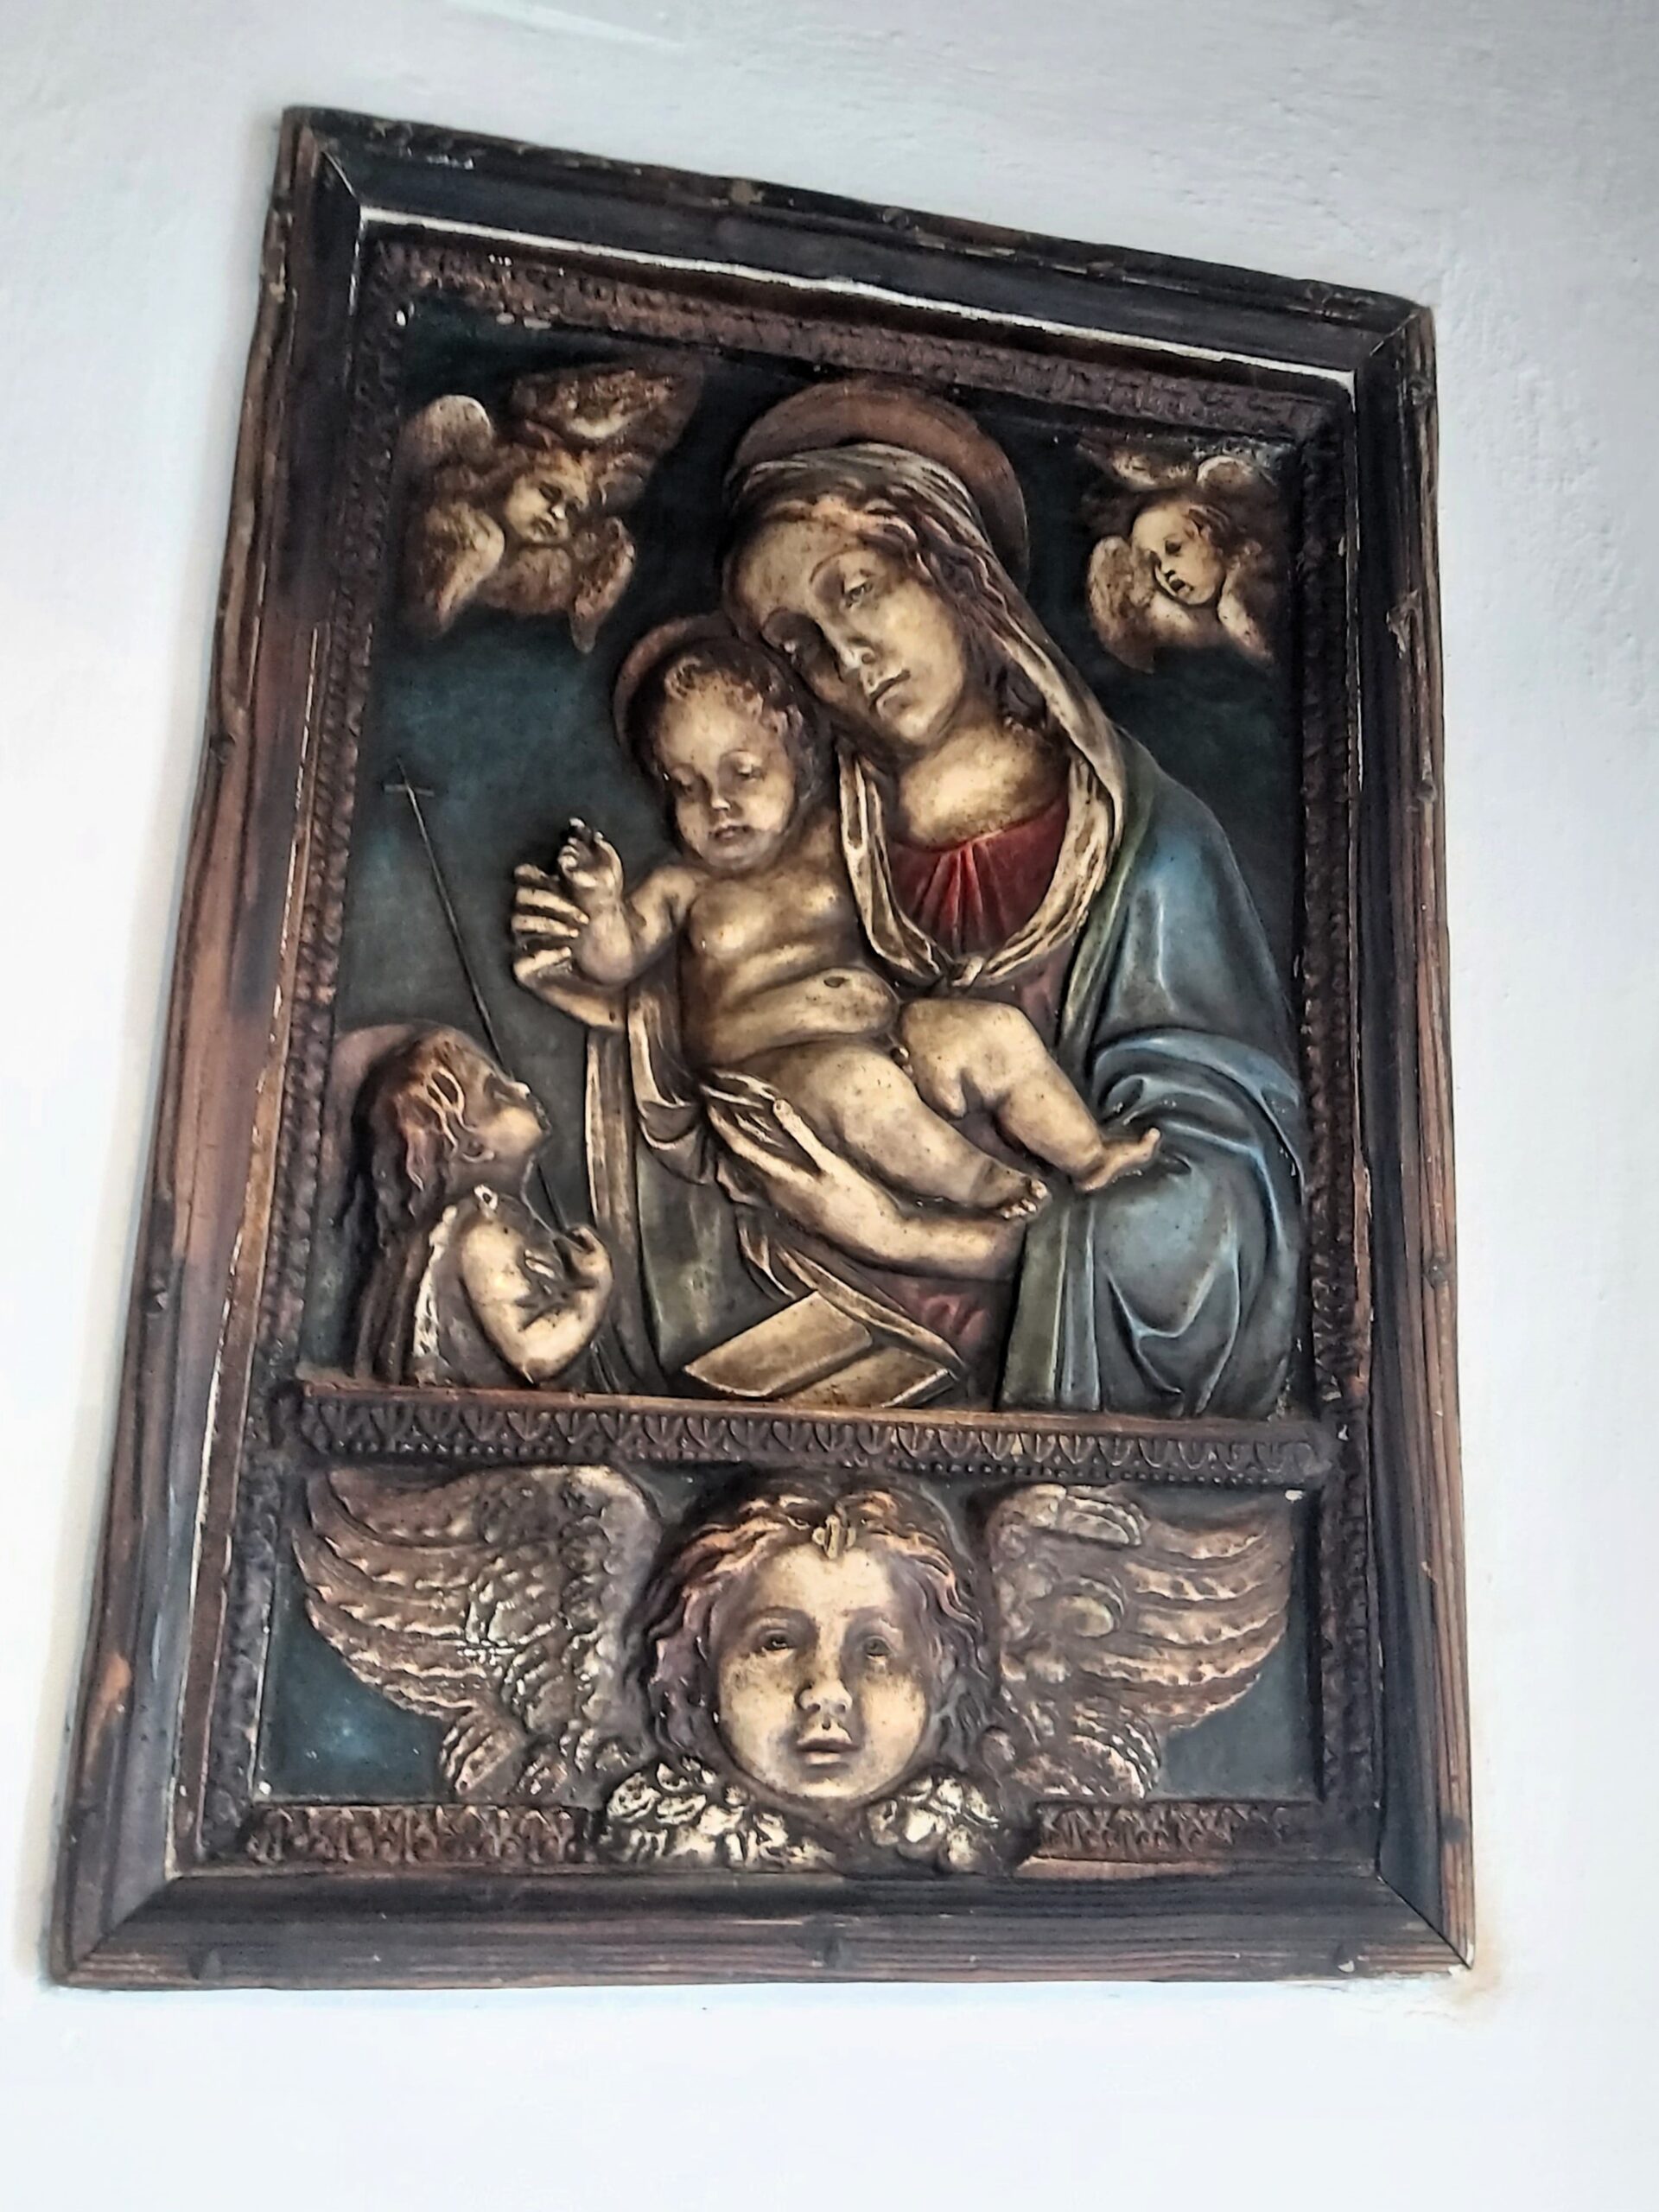 Virgin Mary artwork in Bran Castle, Romania